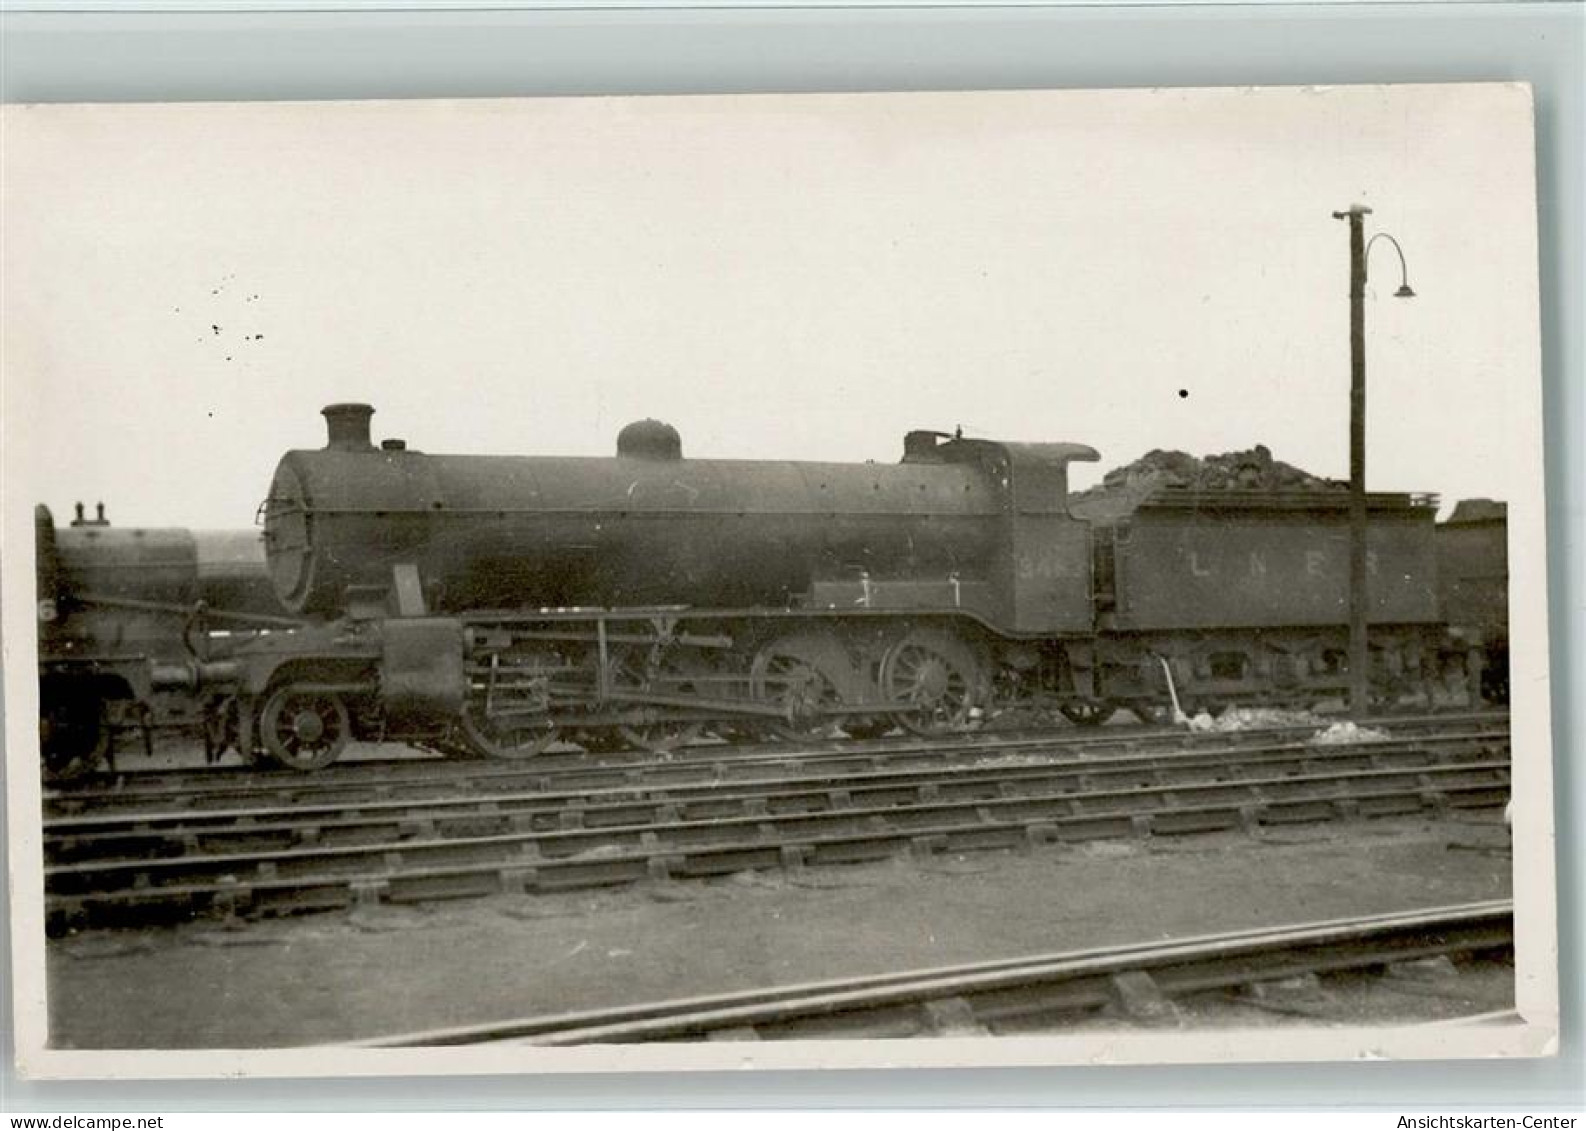 10142209 - Lokomotiven Ausland 3483 - Trains